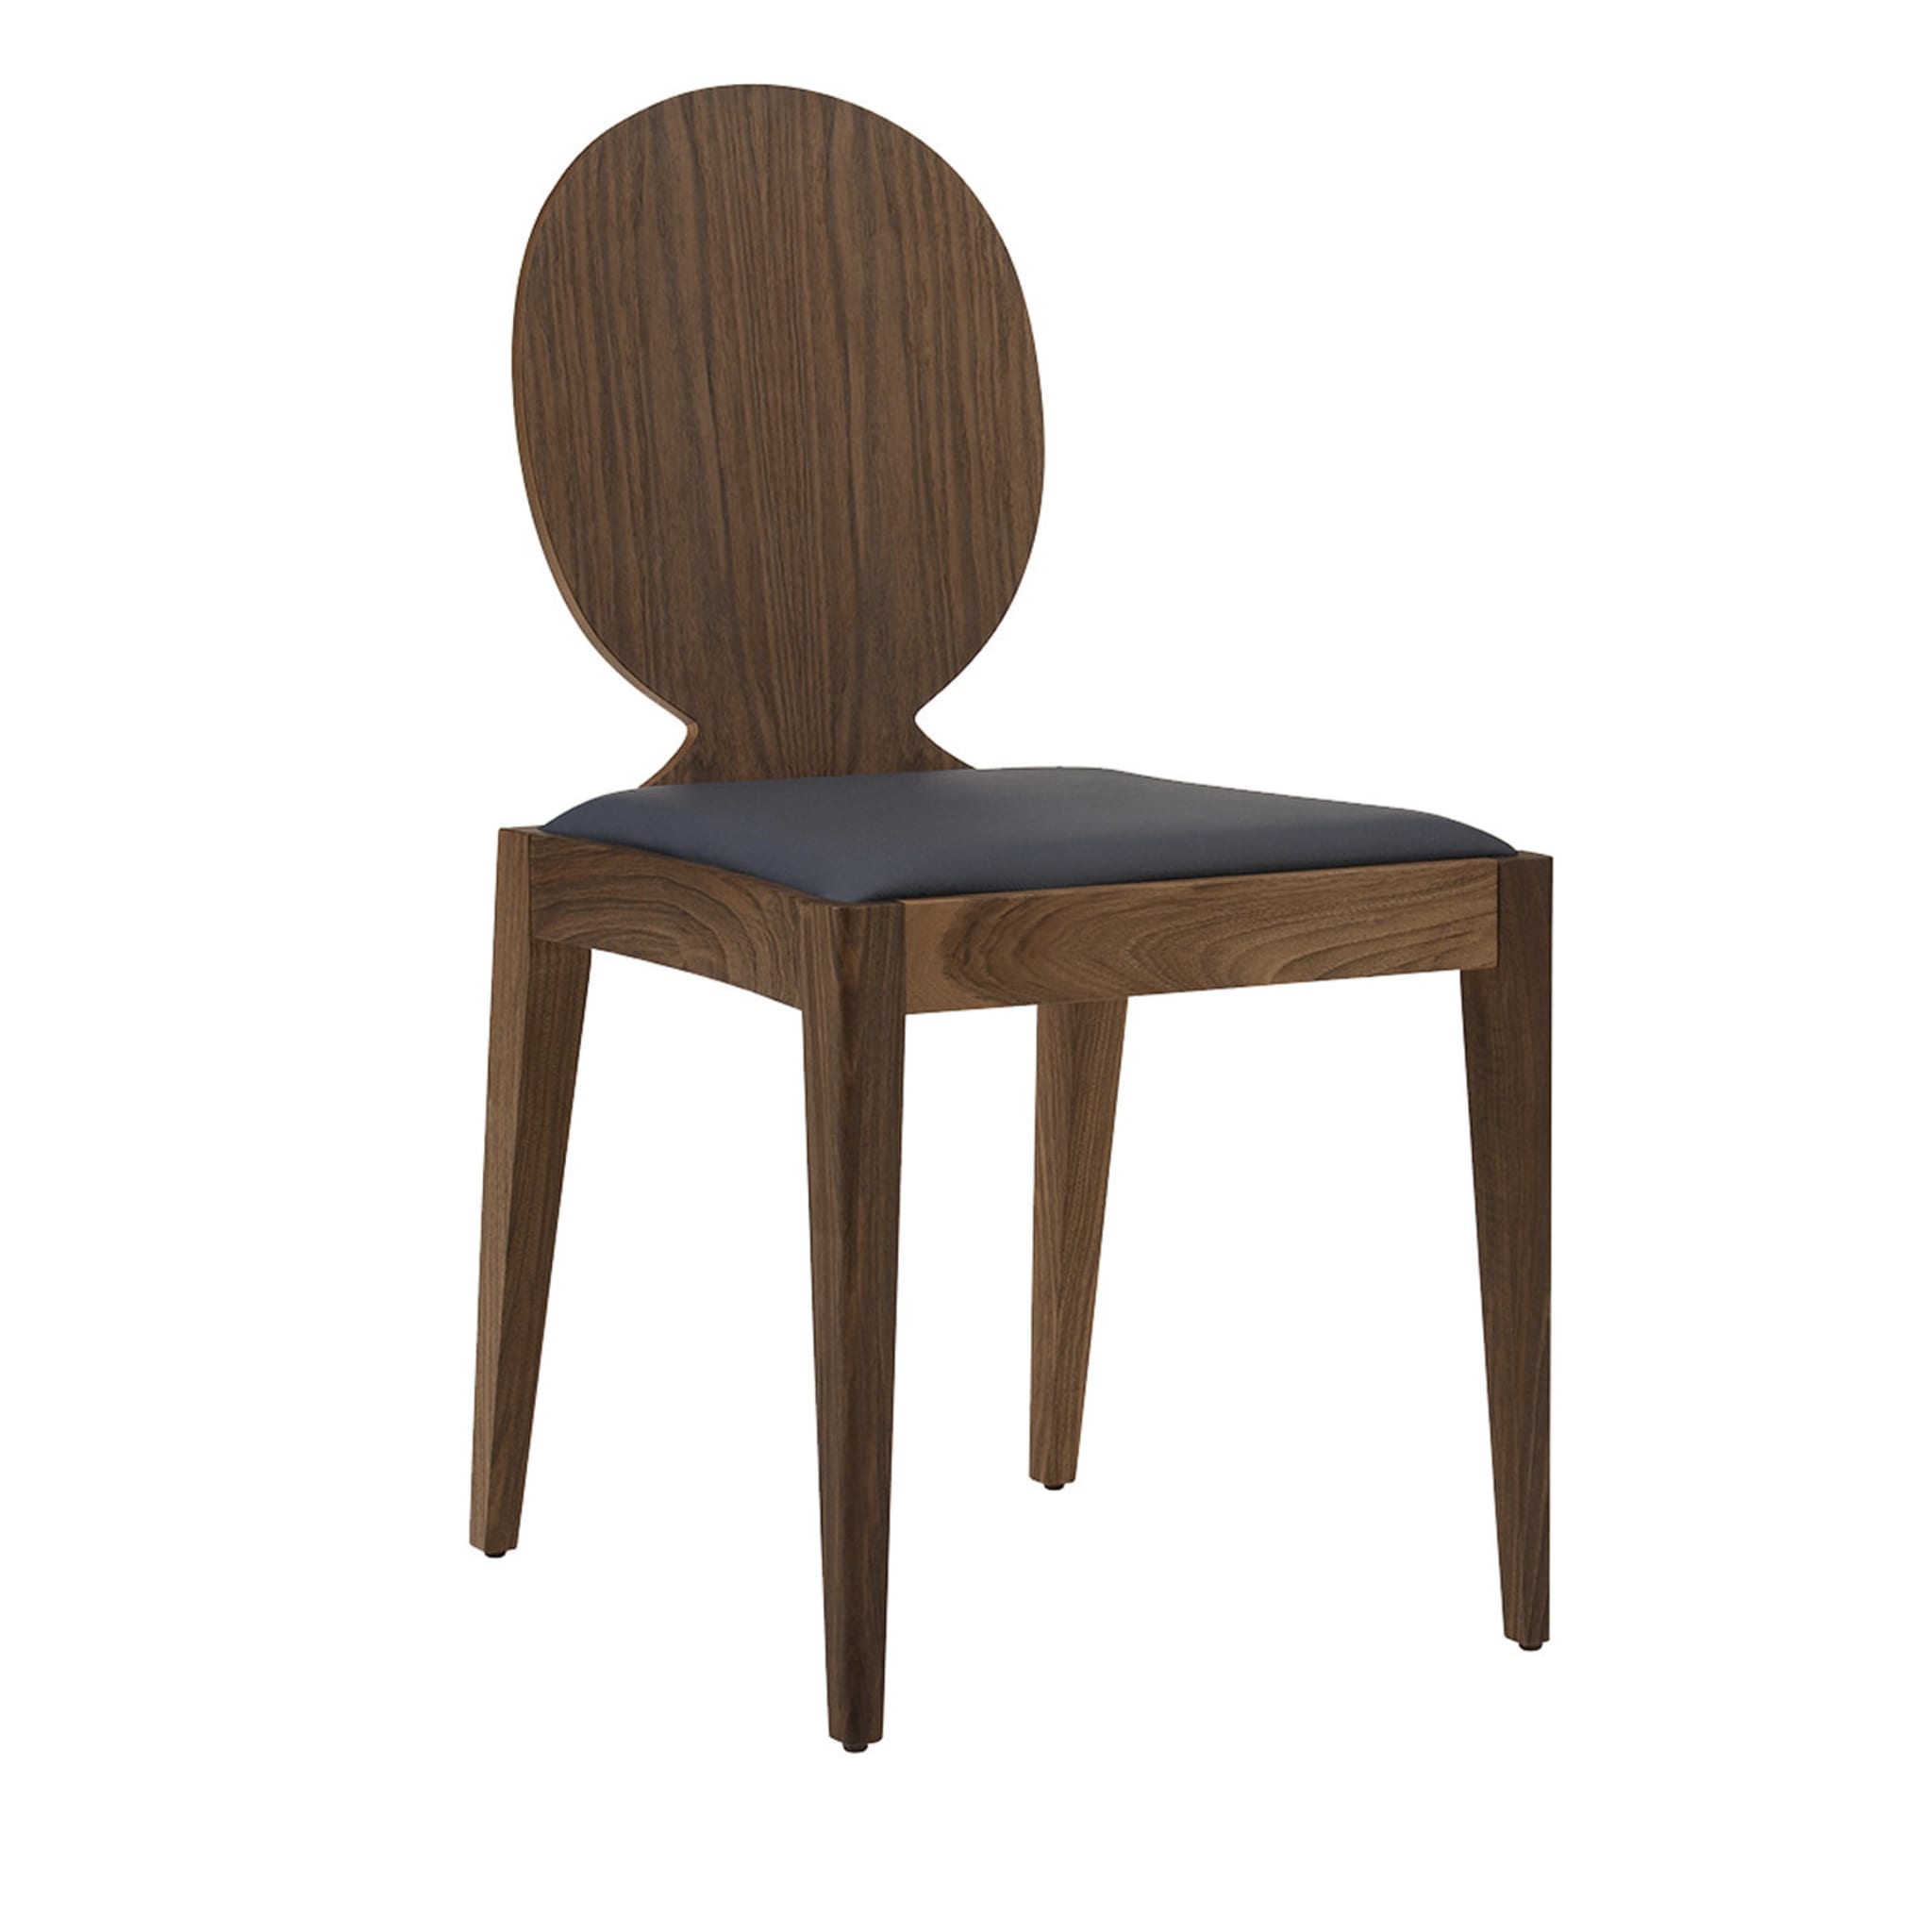 Positano Wood Chair - Main view